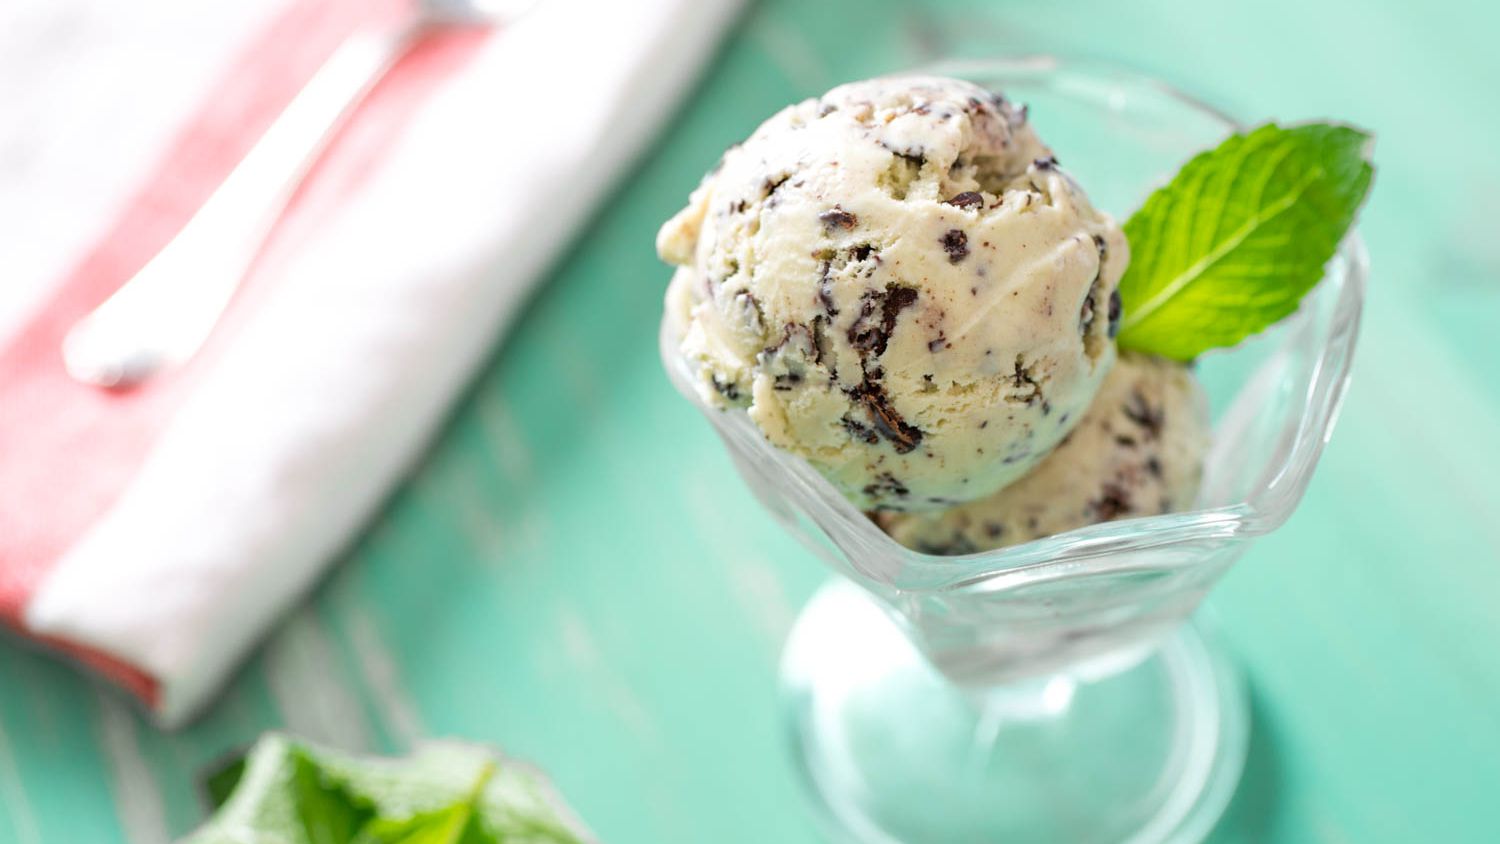 divisive foods - Mint chocolate chip ice cream